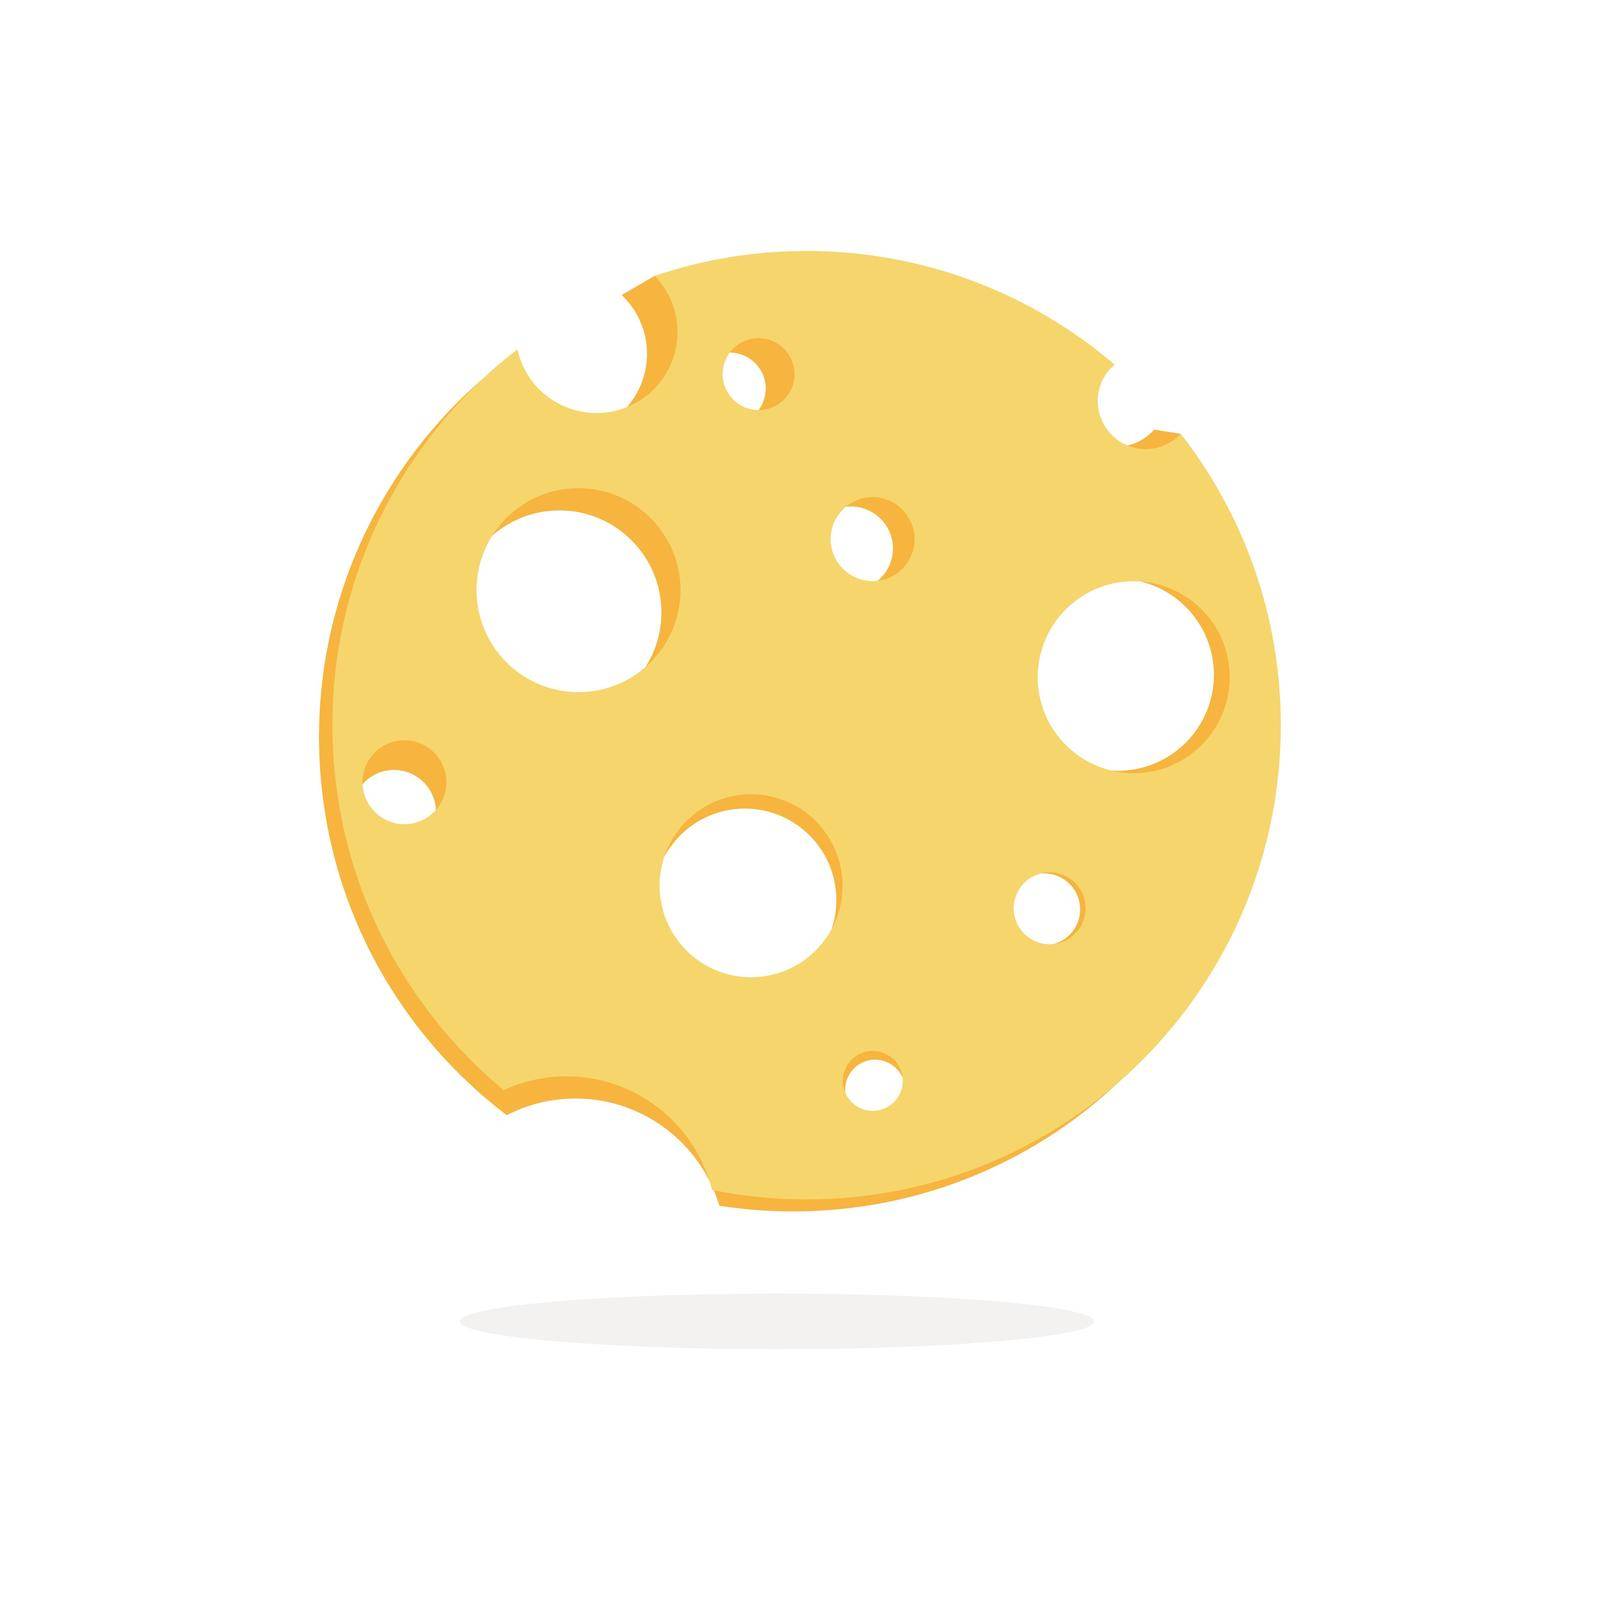 Tasty Cheese by macroarting